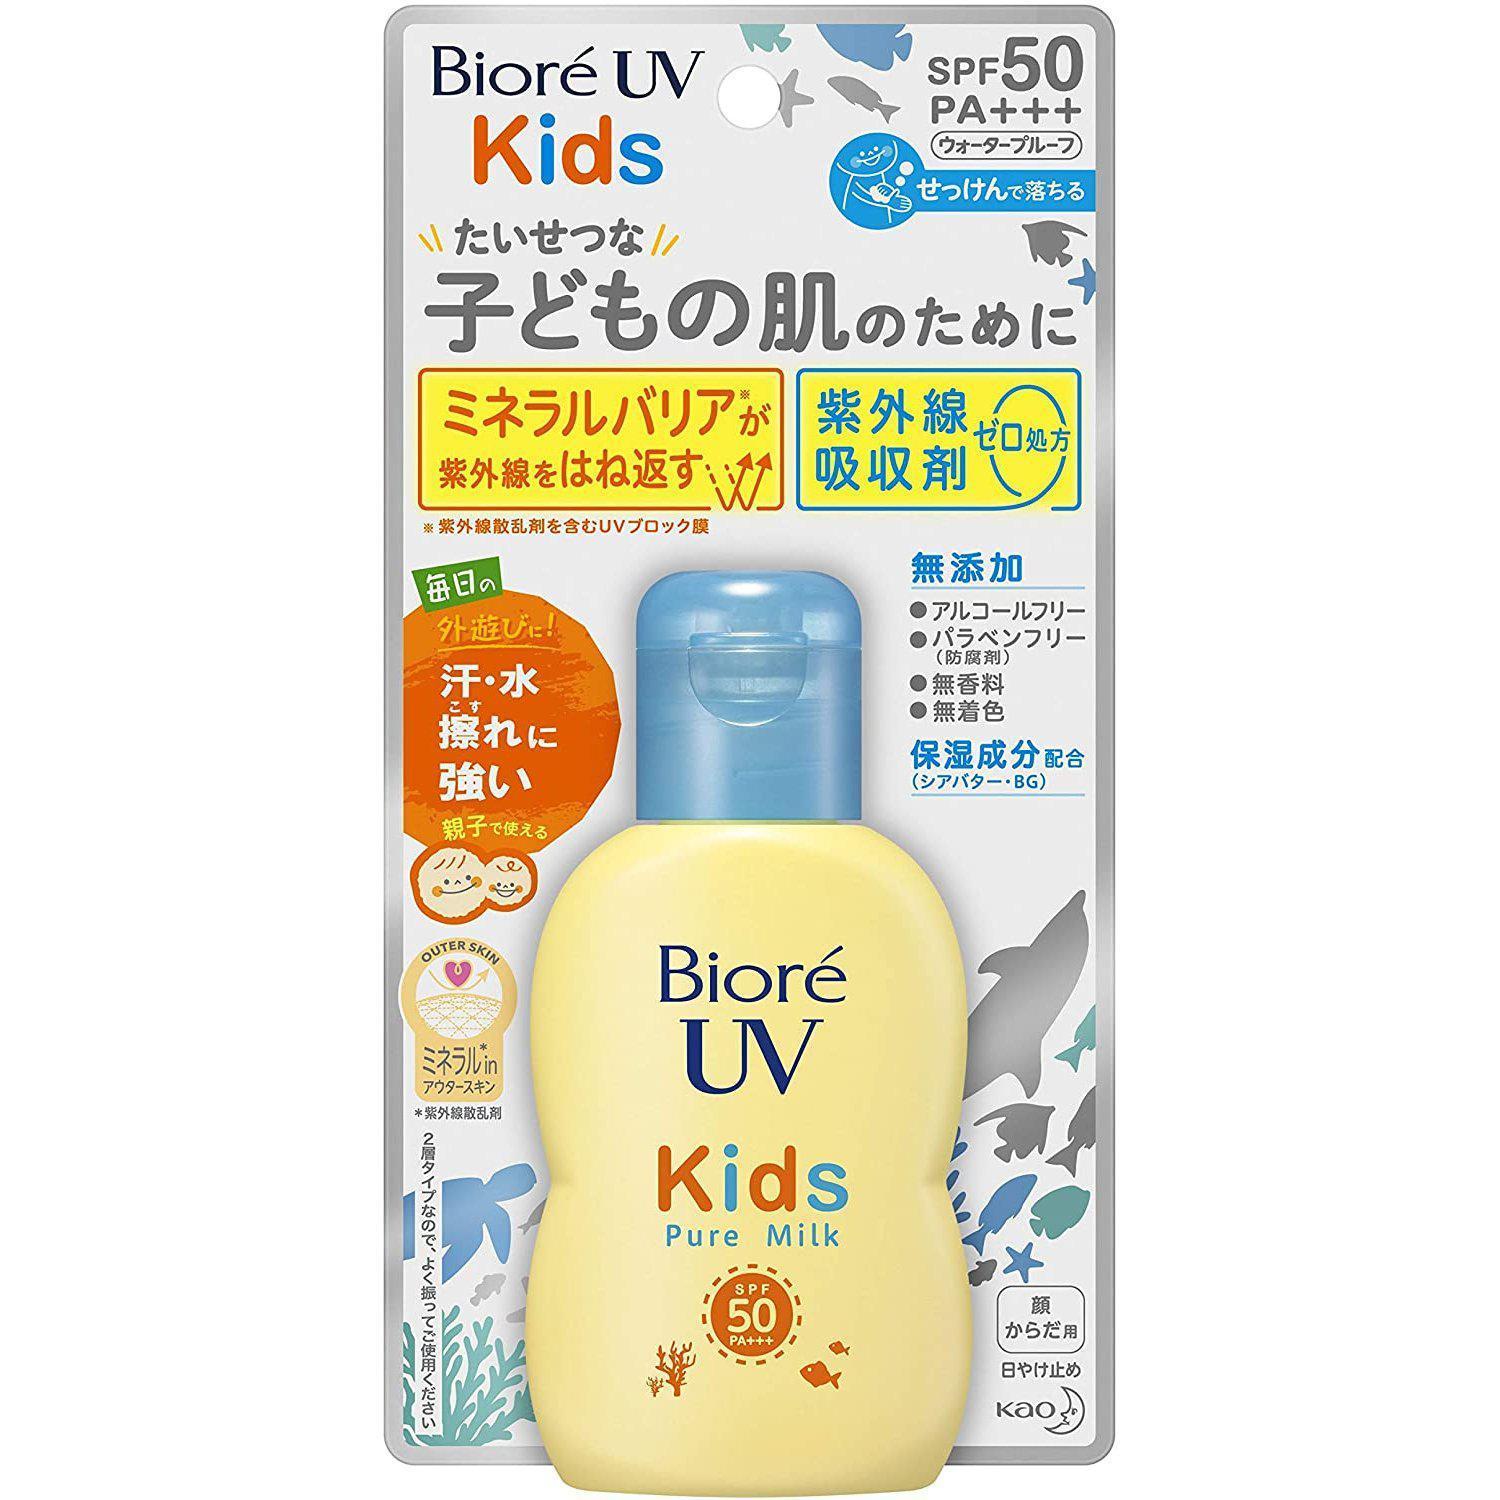 Kao Biore UV Kids Pure Milk Sunscreen SPF50+ PA+++ 70g